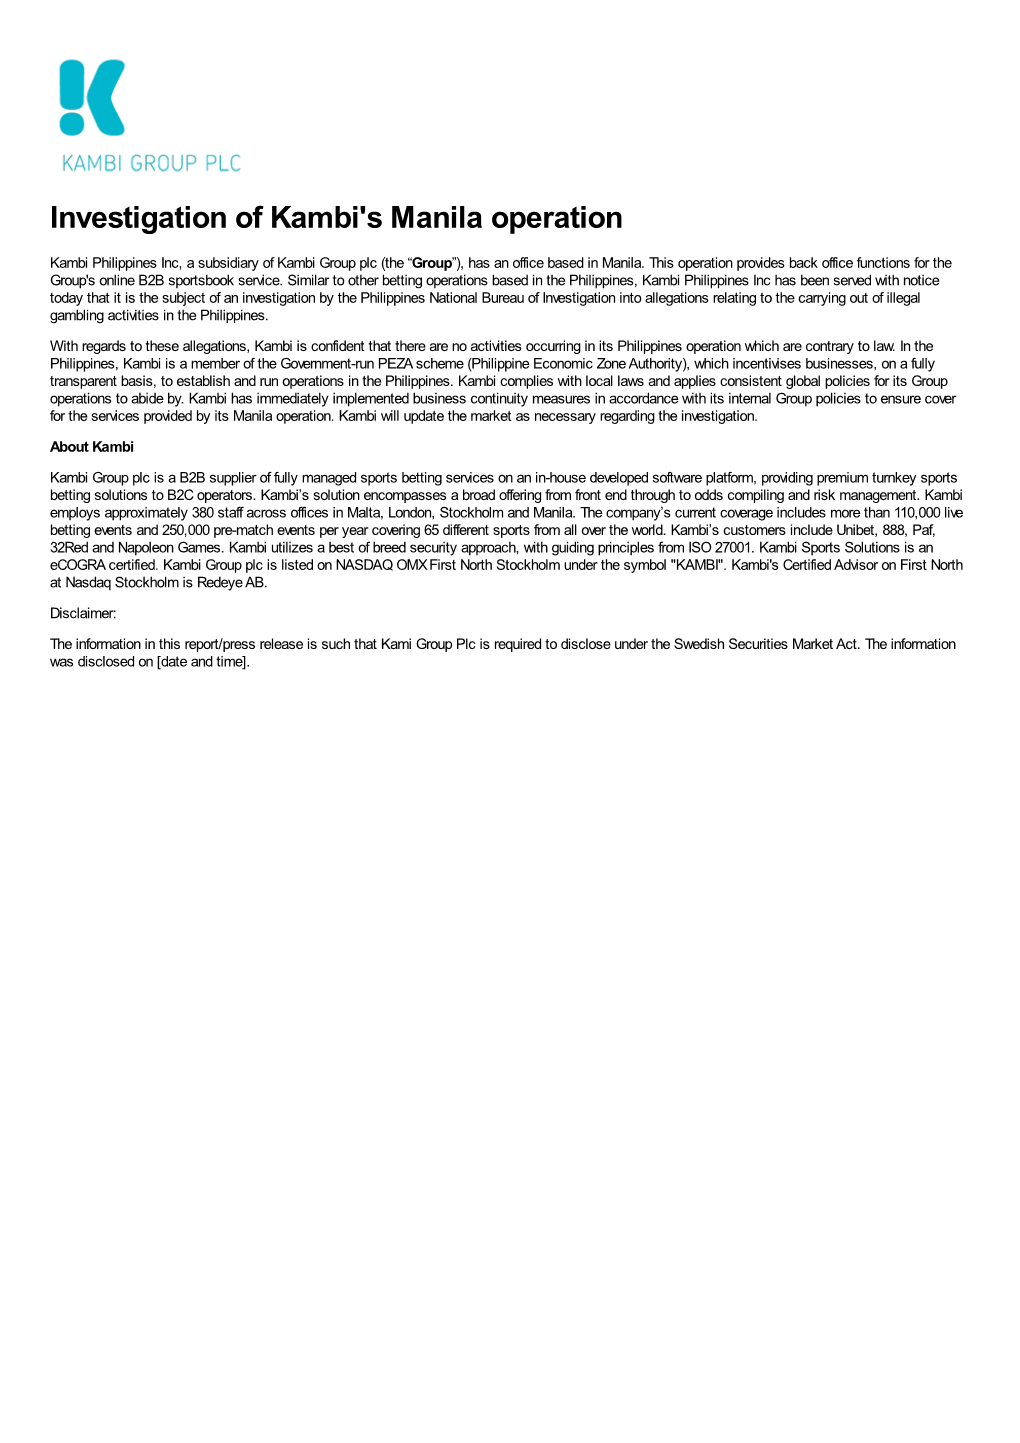 Investigation of Kambi's Manila Operation